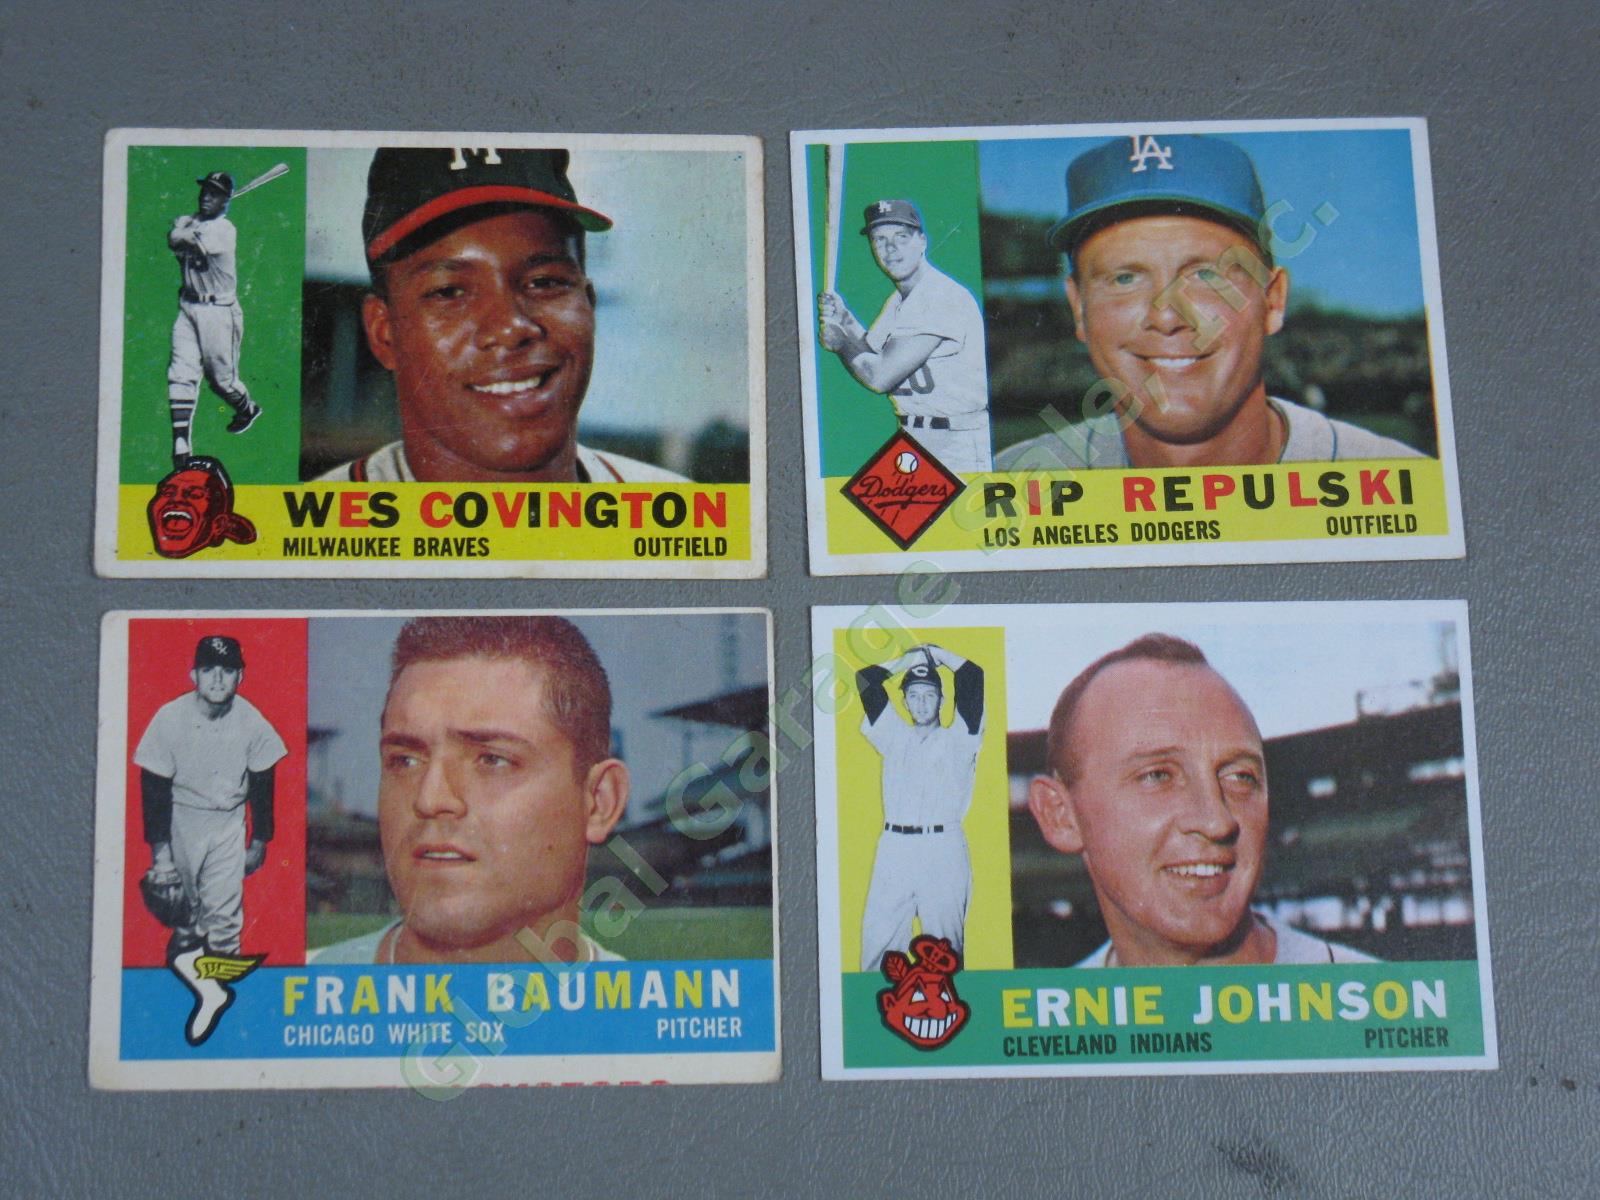 165 VtgTopps 1960 Baseball Card Collection Lot Rookies Teams Senators Braves NR! 4